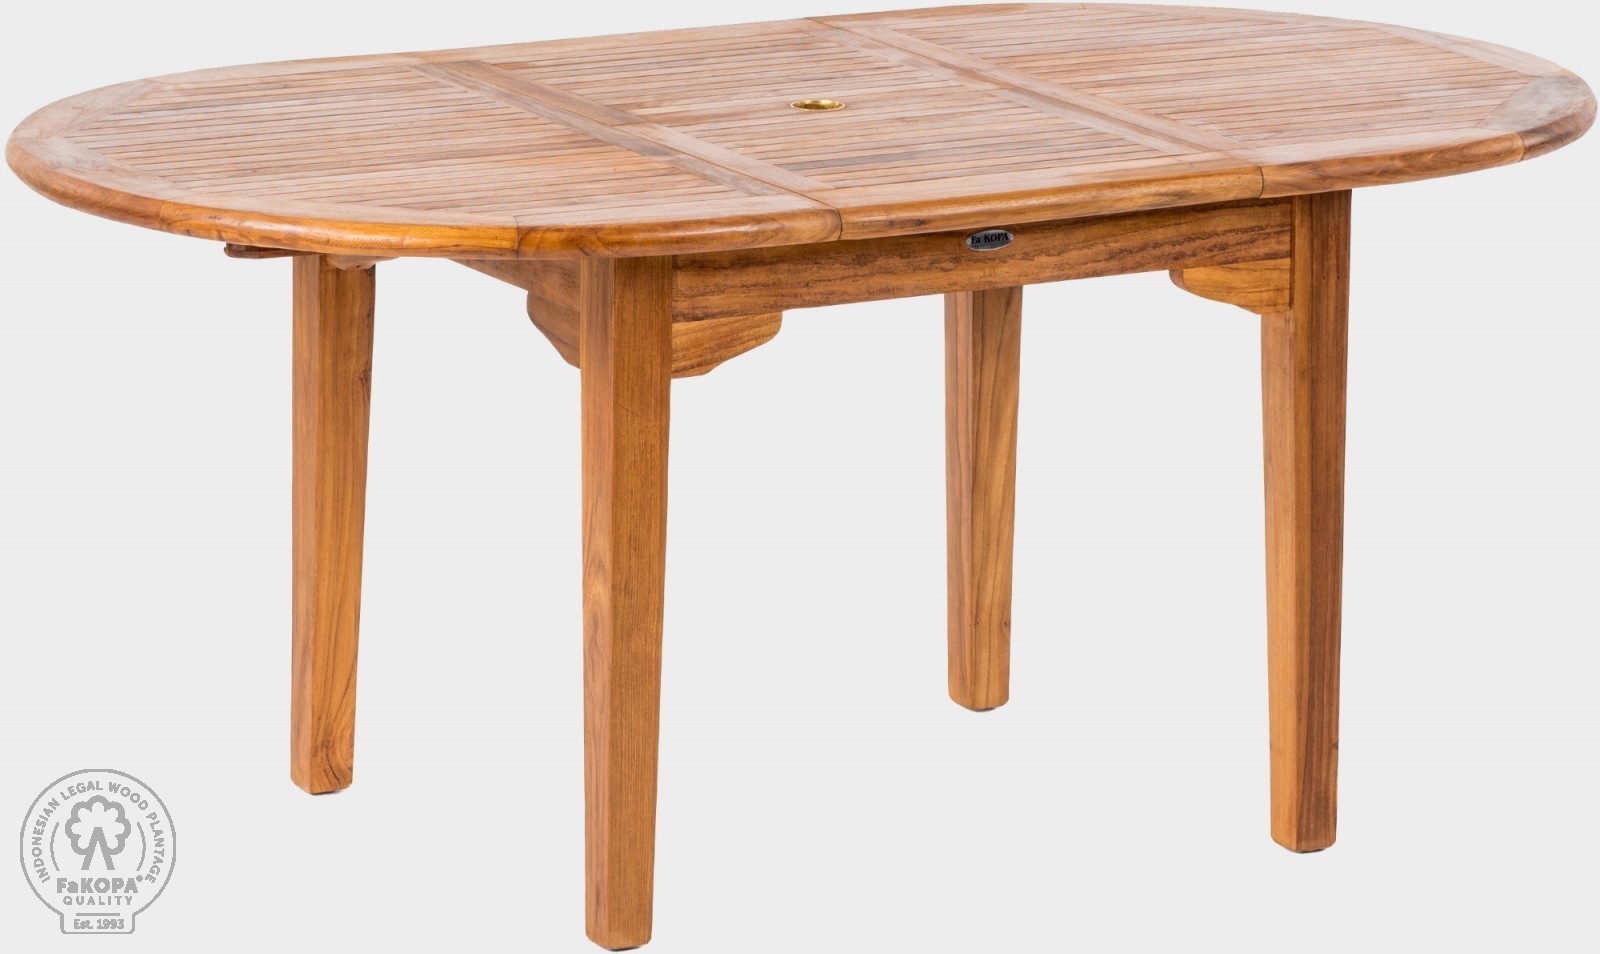 FaKOPA s. r. o. ELEGANTE - rozkládací oválný teakový stůl 100 x 130-180 cm, teak